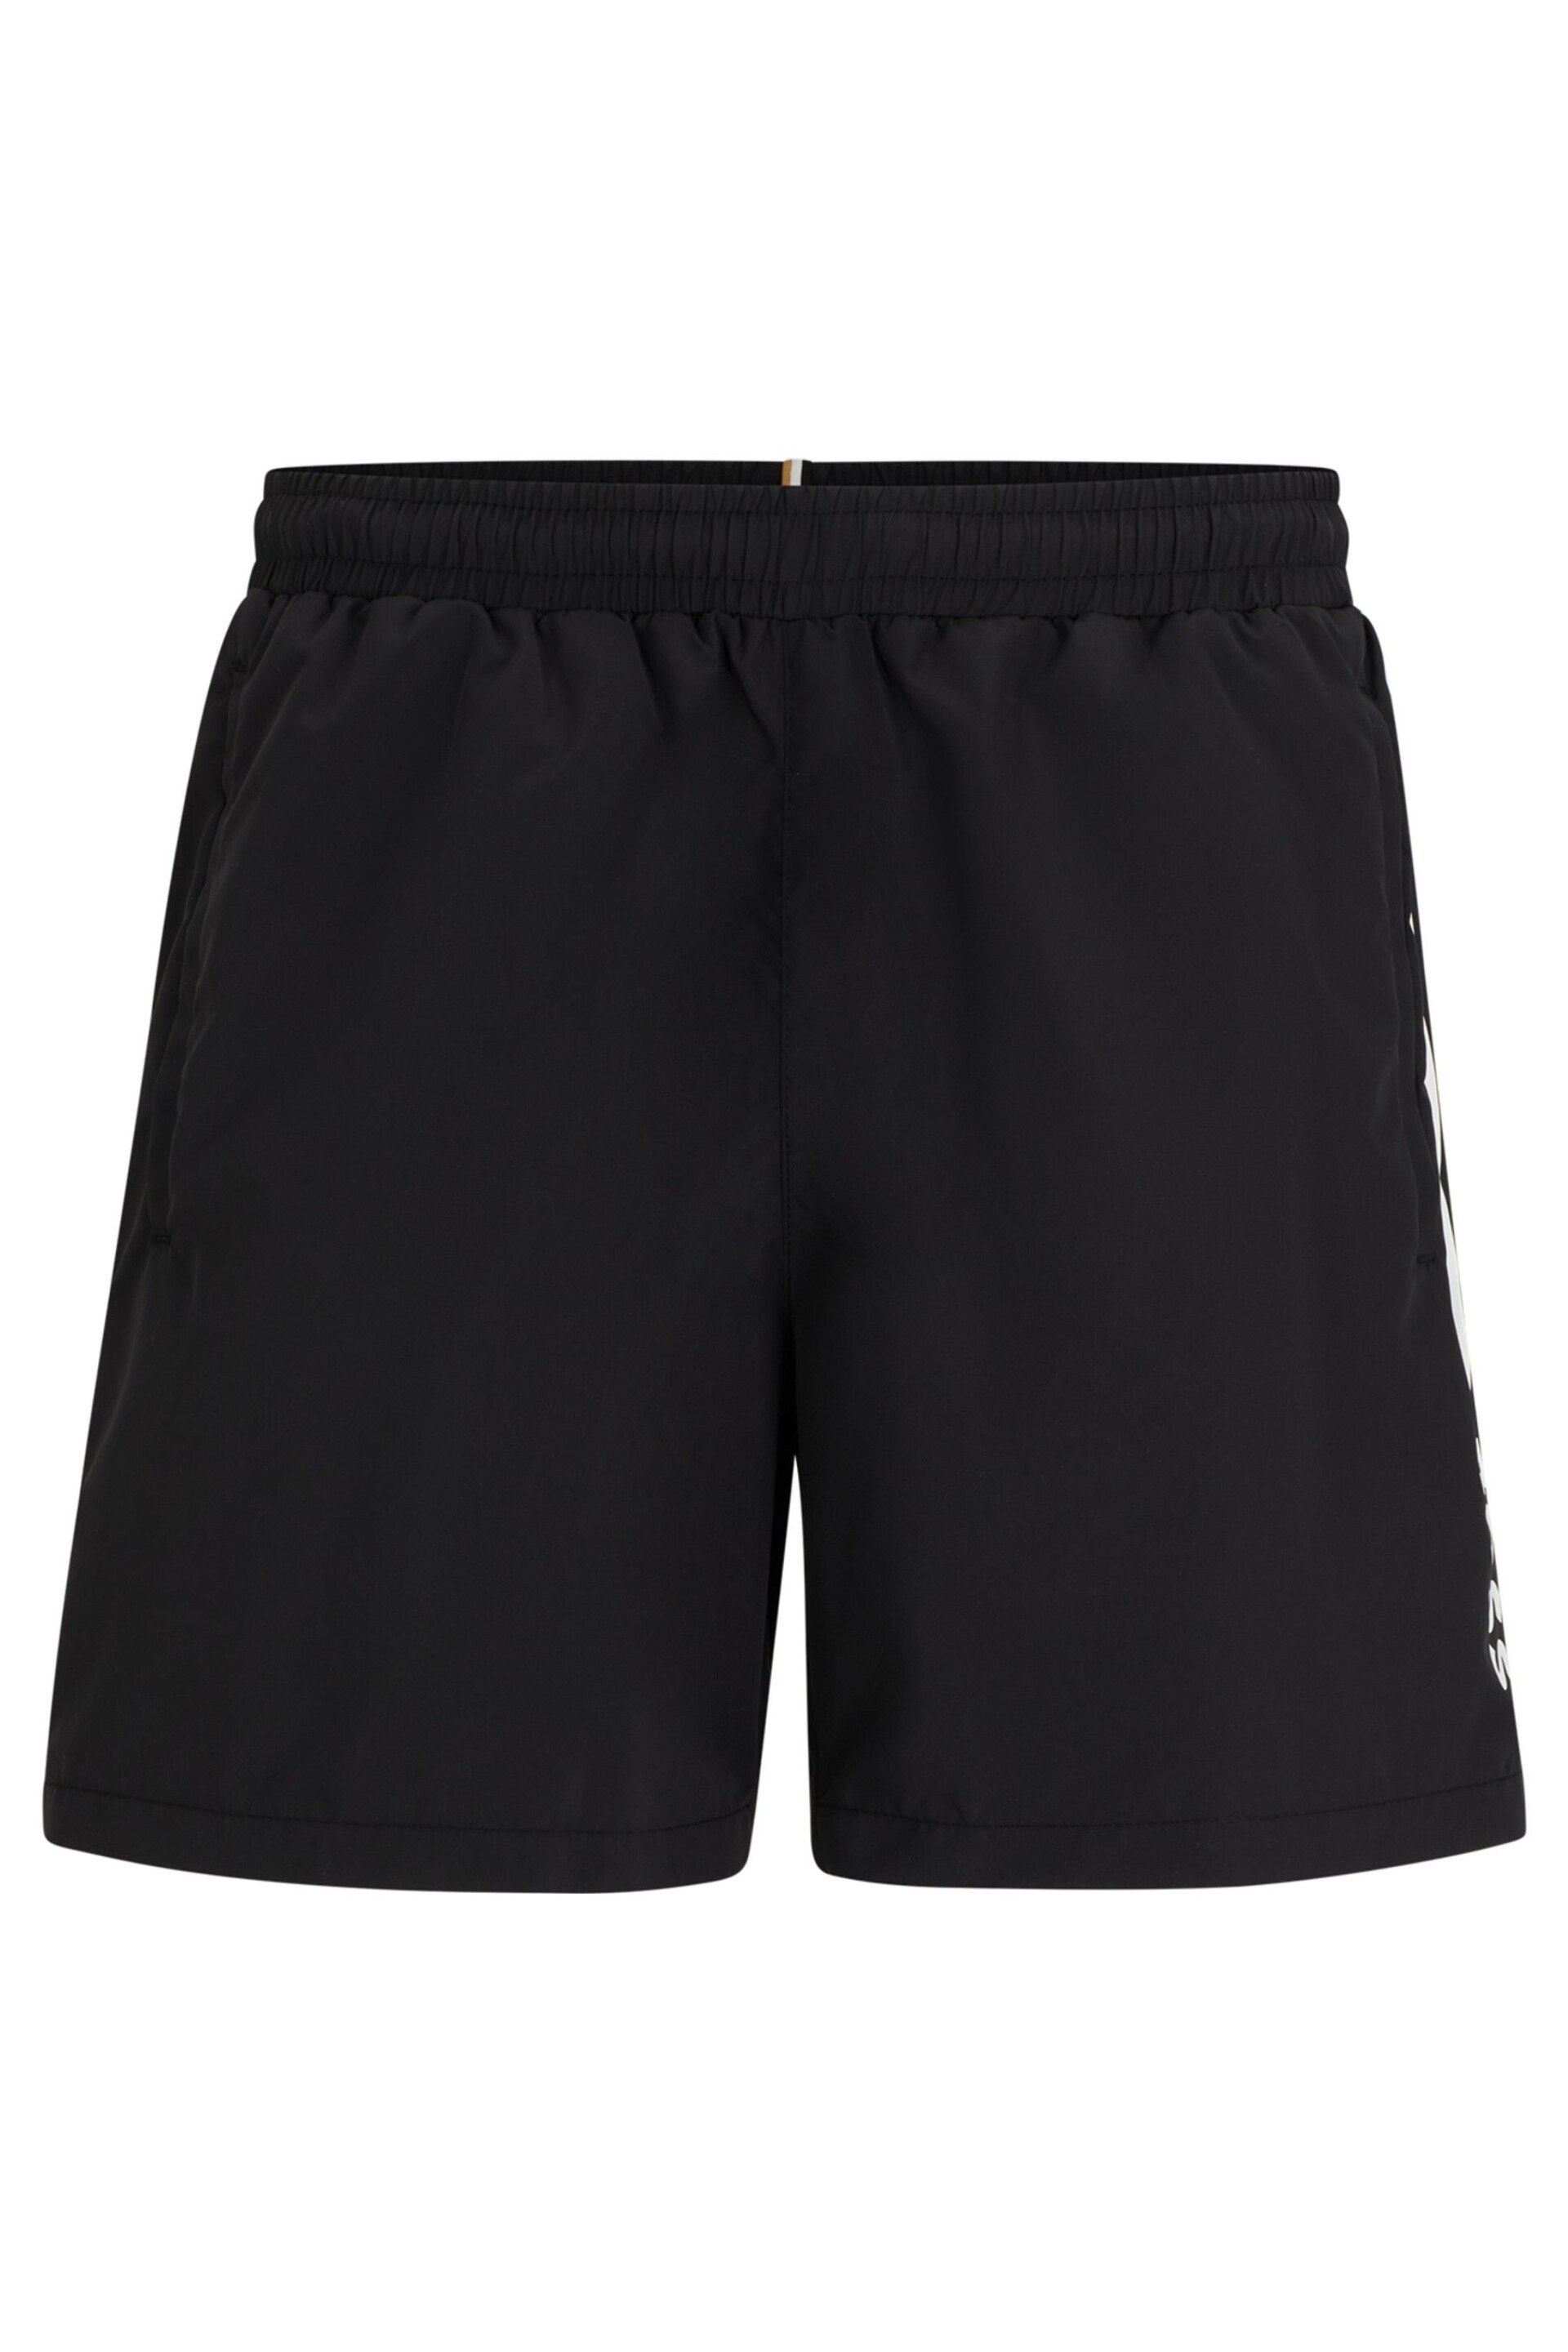 BOSS Black Swim Shorts With Logo And Stripe - Image 4 of 4